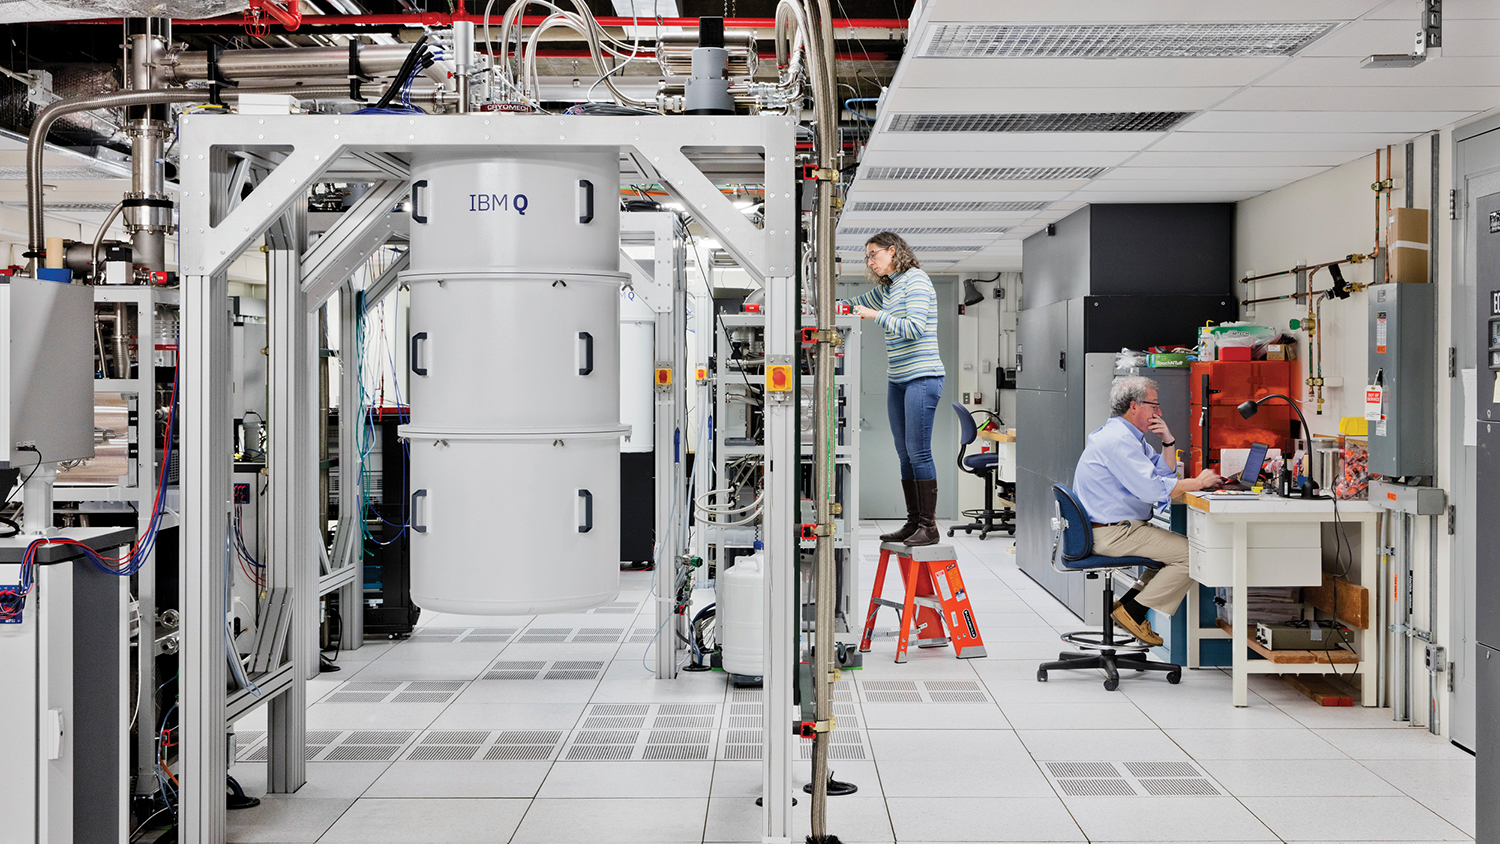 A woman works inside IBM's quantum computer.